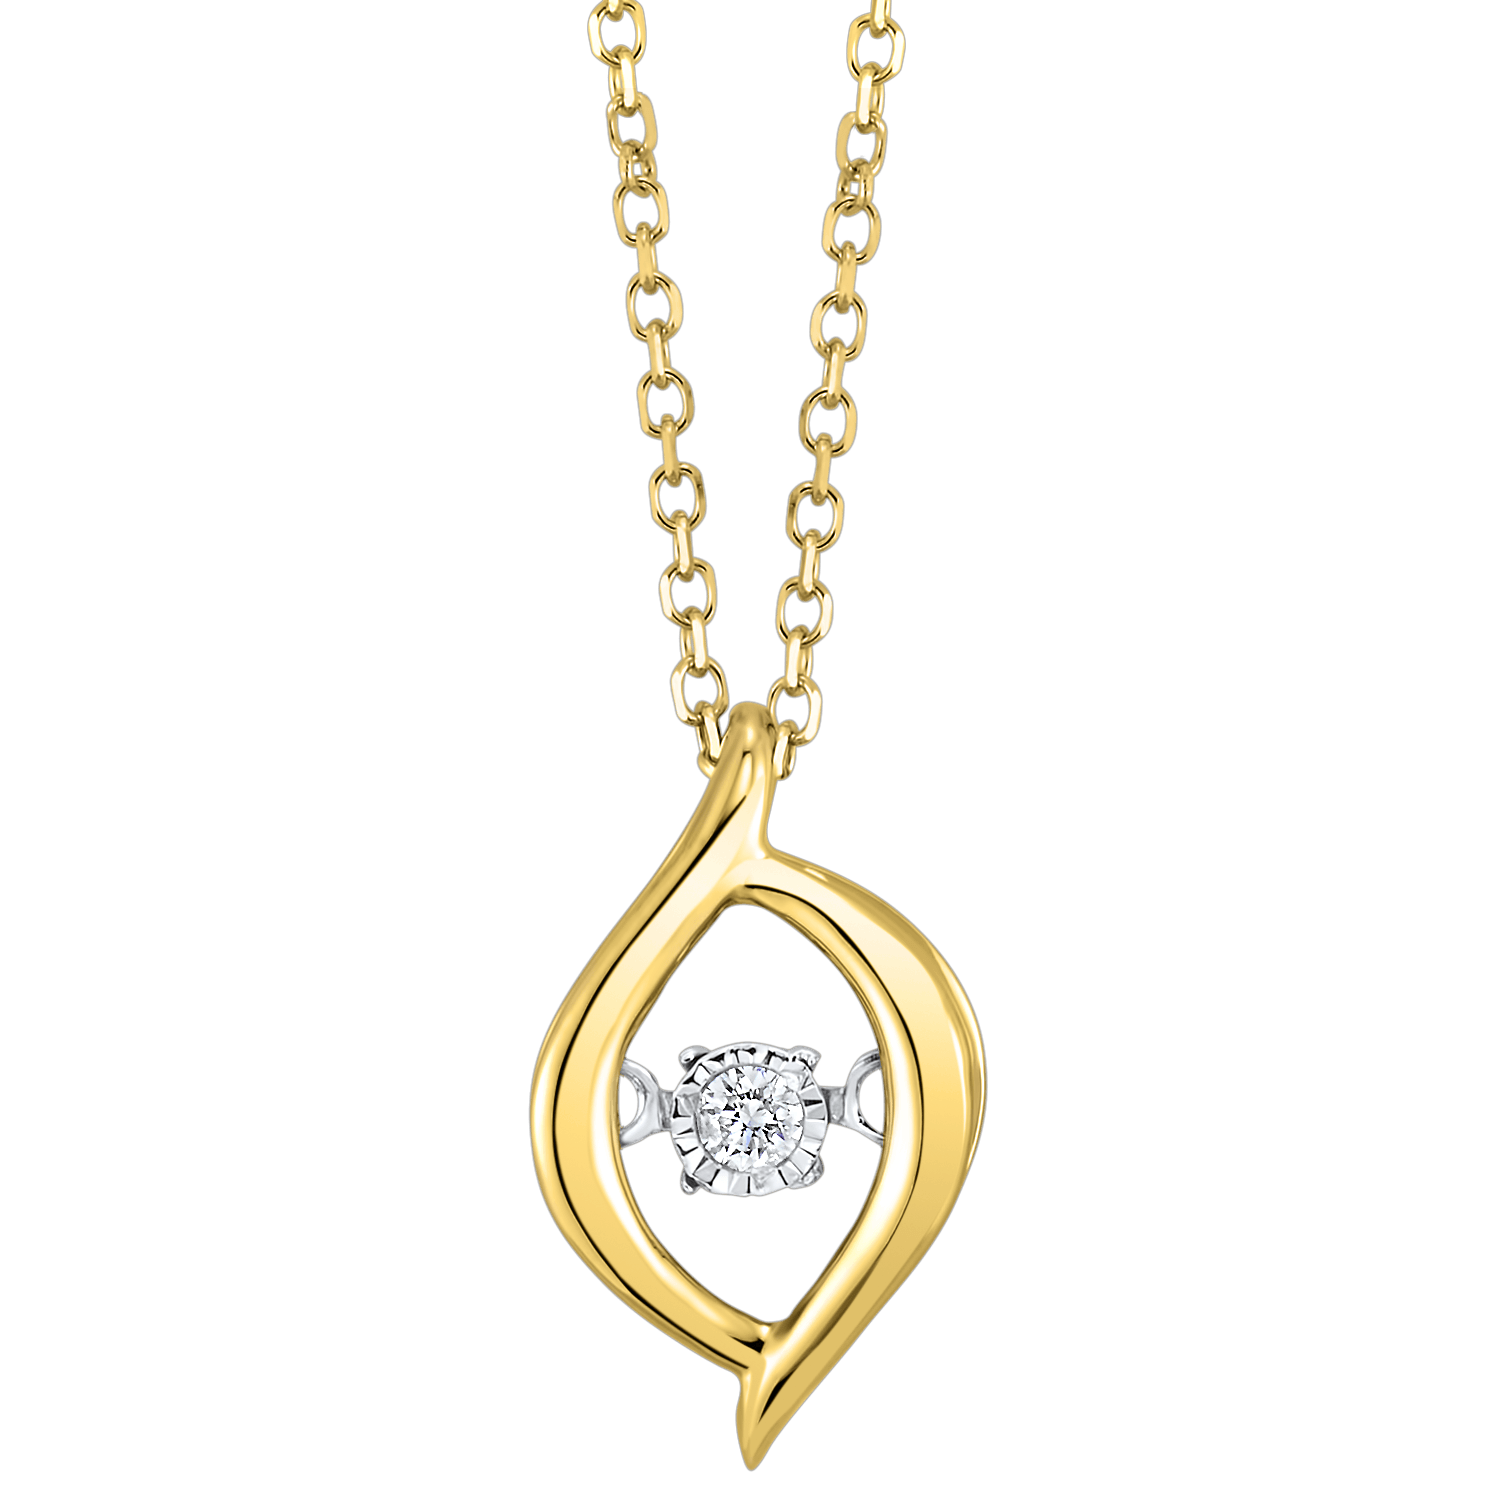 BW James Jewelers Pendant 16 Page Christmas Catalog Offer Gold Diamond ROL Pendant